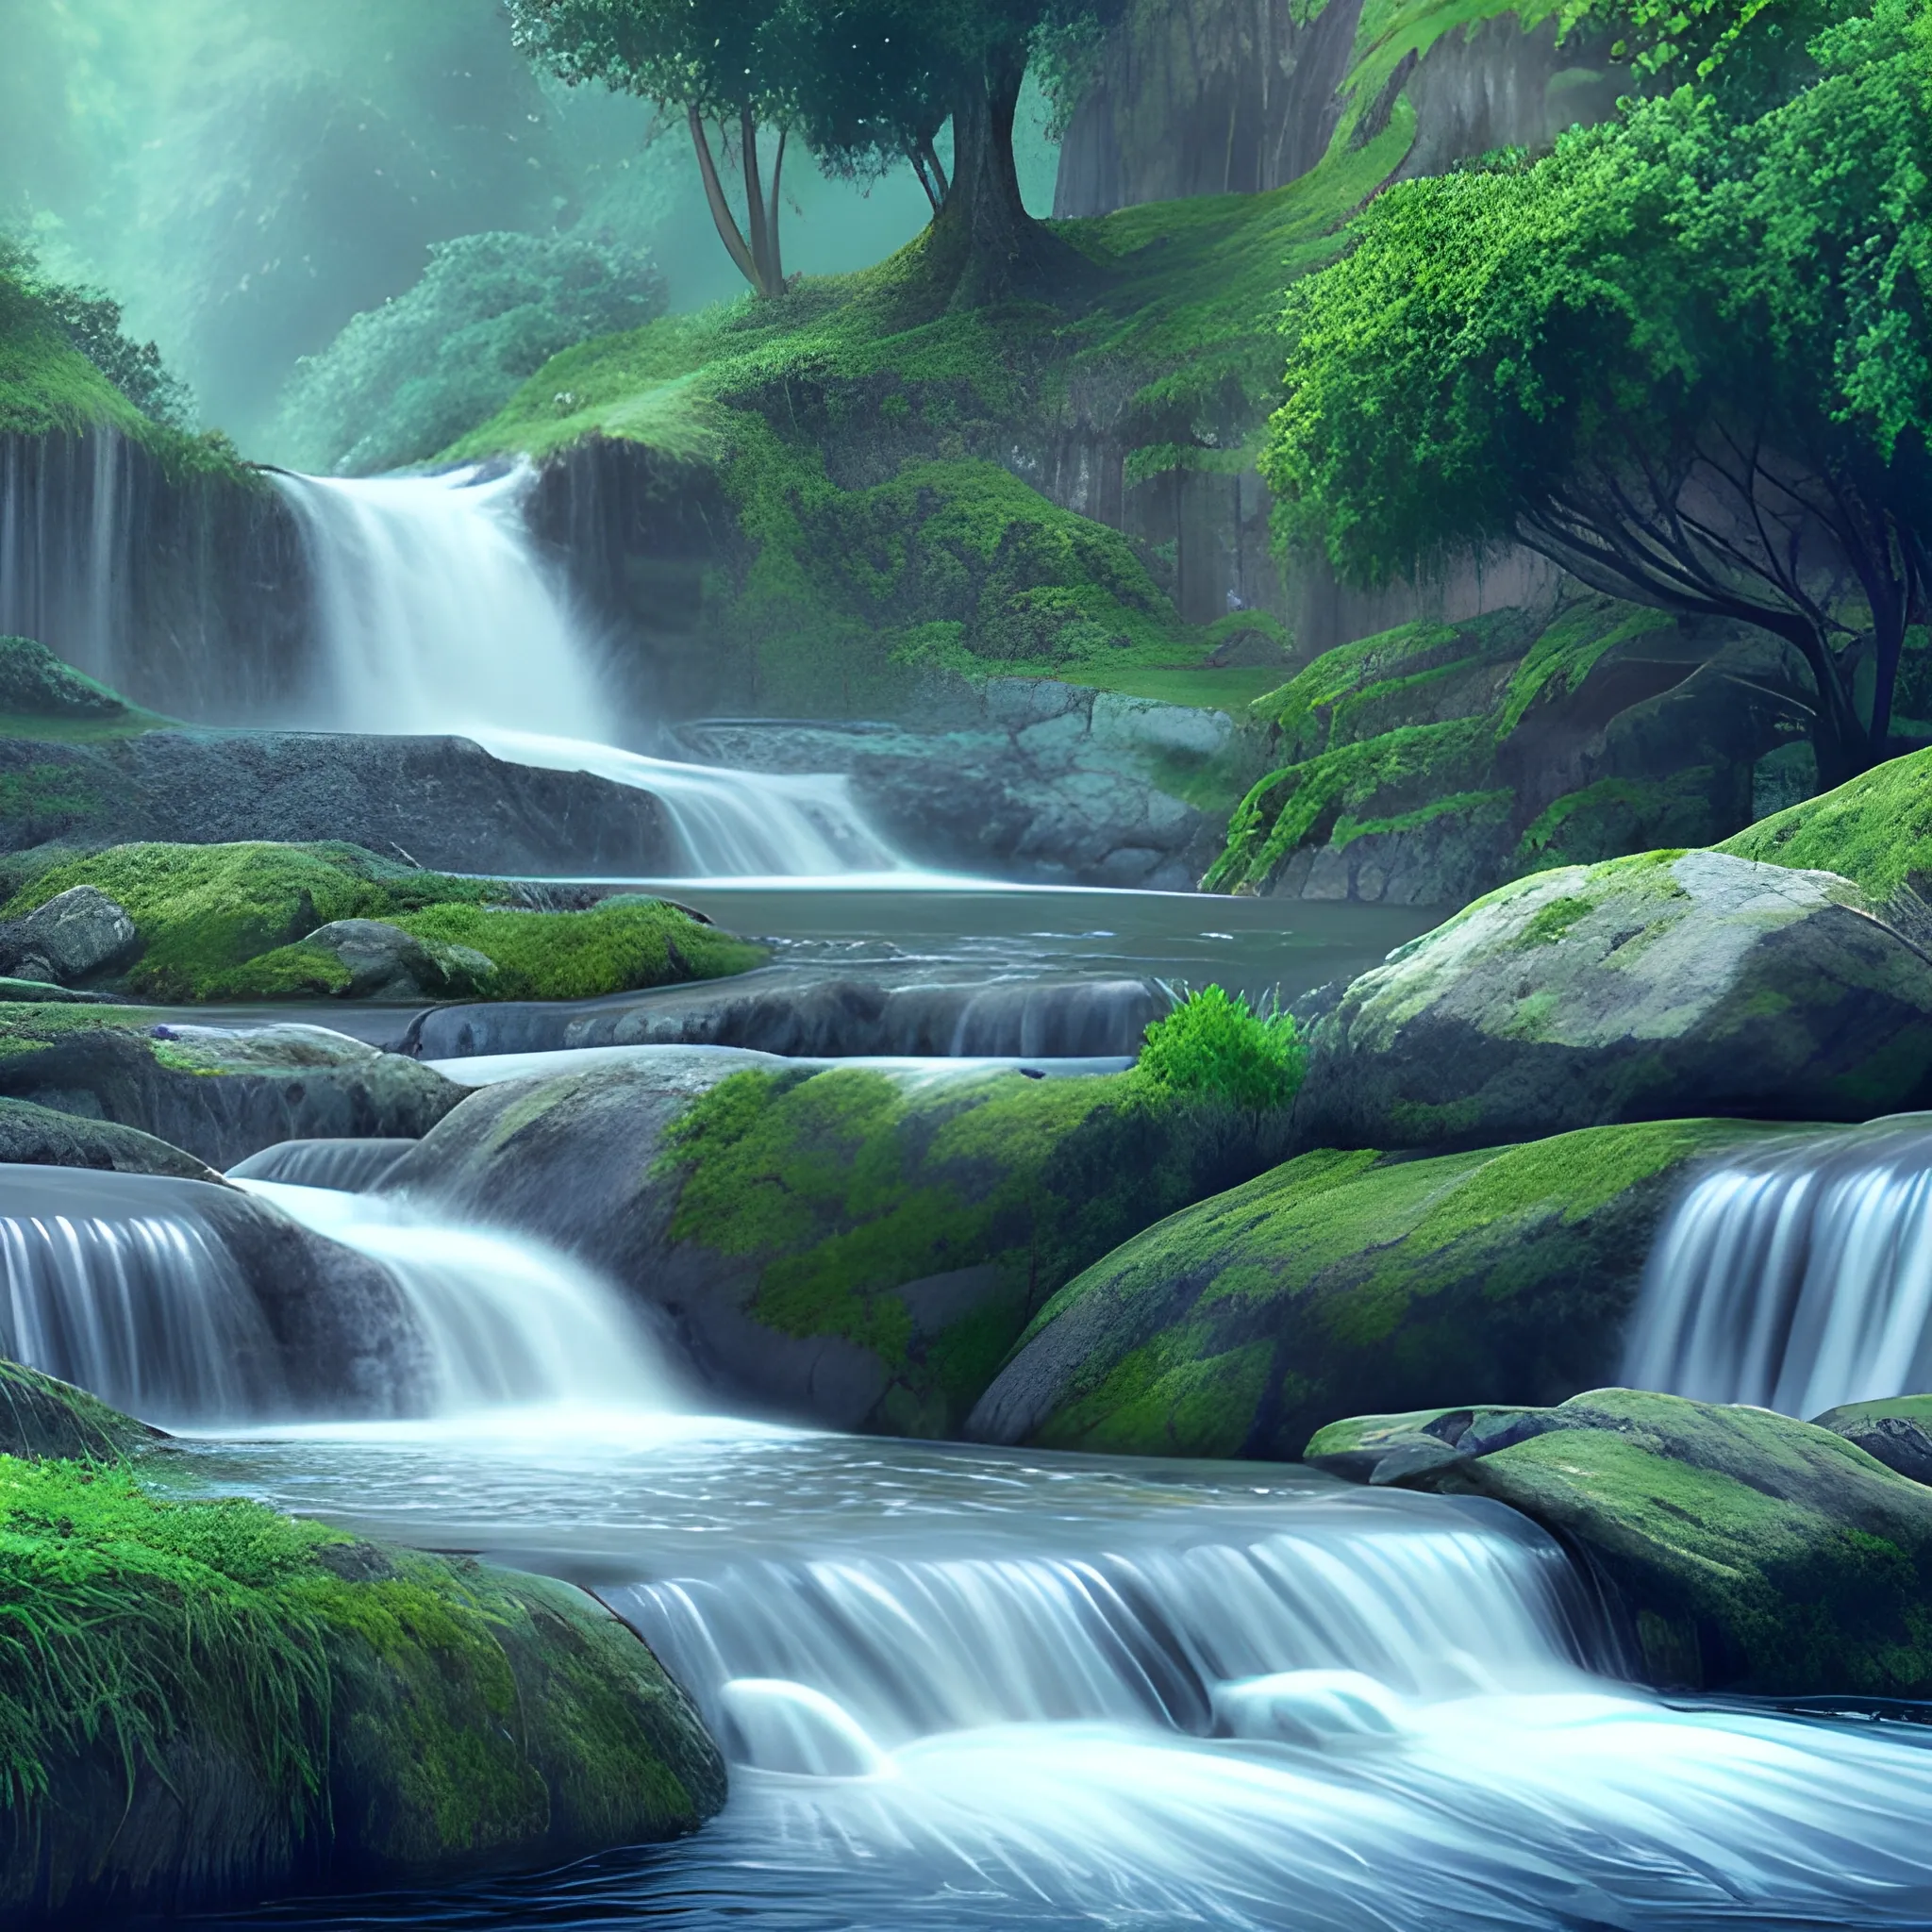 make it river, waterfall background, photorealistic, 4k,
